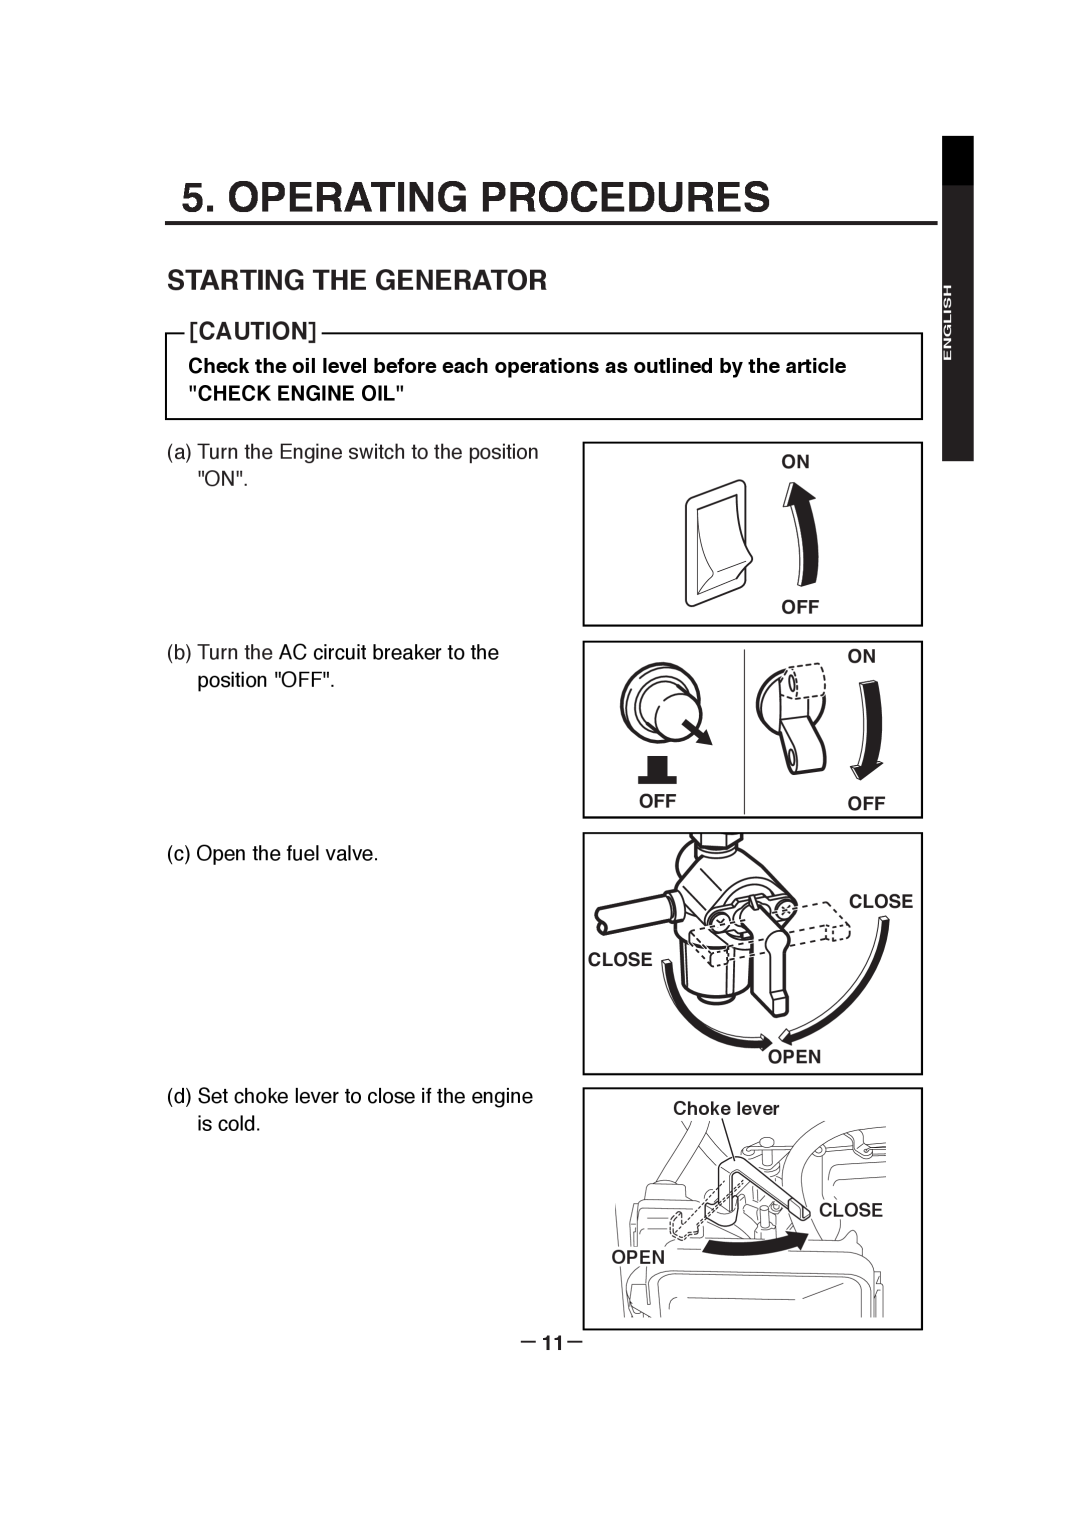 Subaru RGX3000 Operating Procedures, Starting The Generator, － 11－, ［Caution］, On Off On, Close, Open, Choke lever, Clo Se 